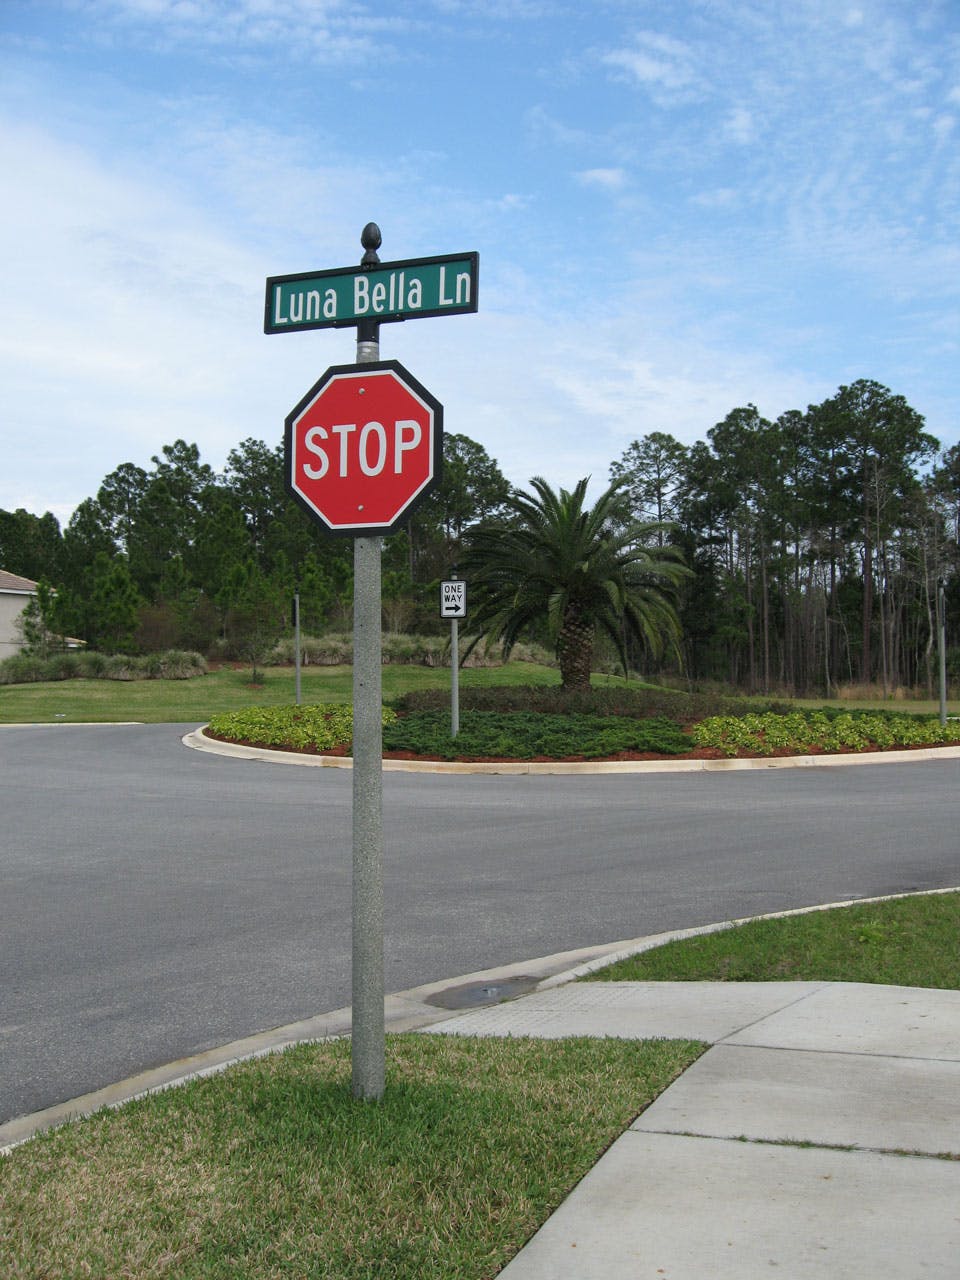 Round street sign pole